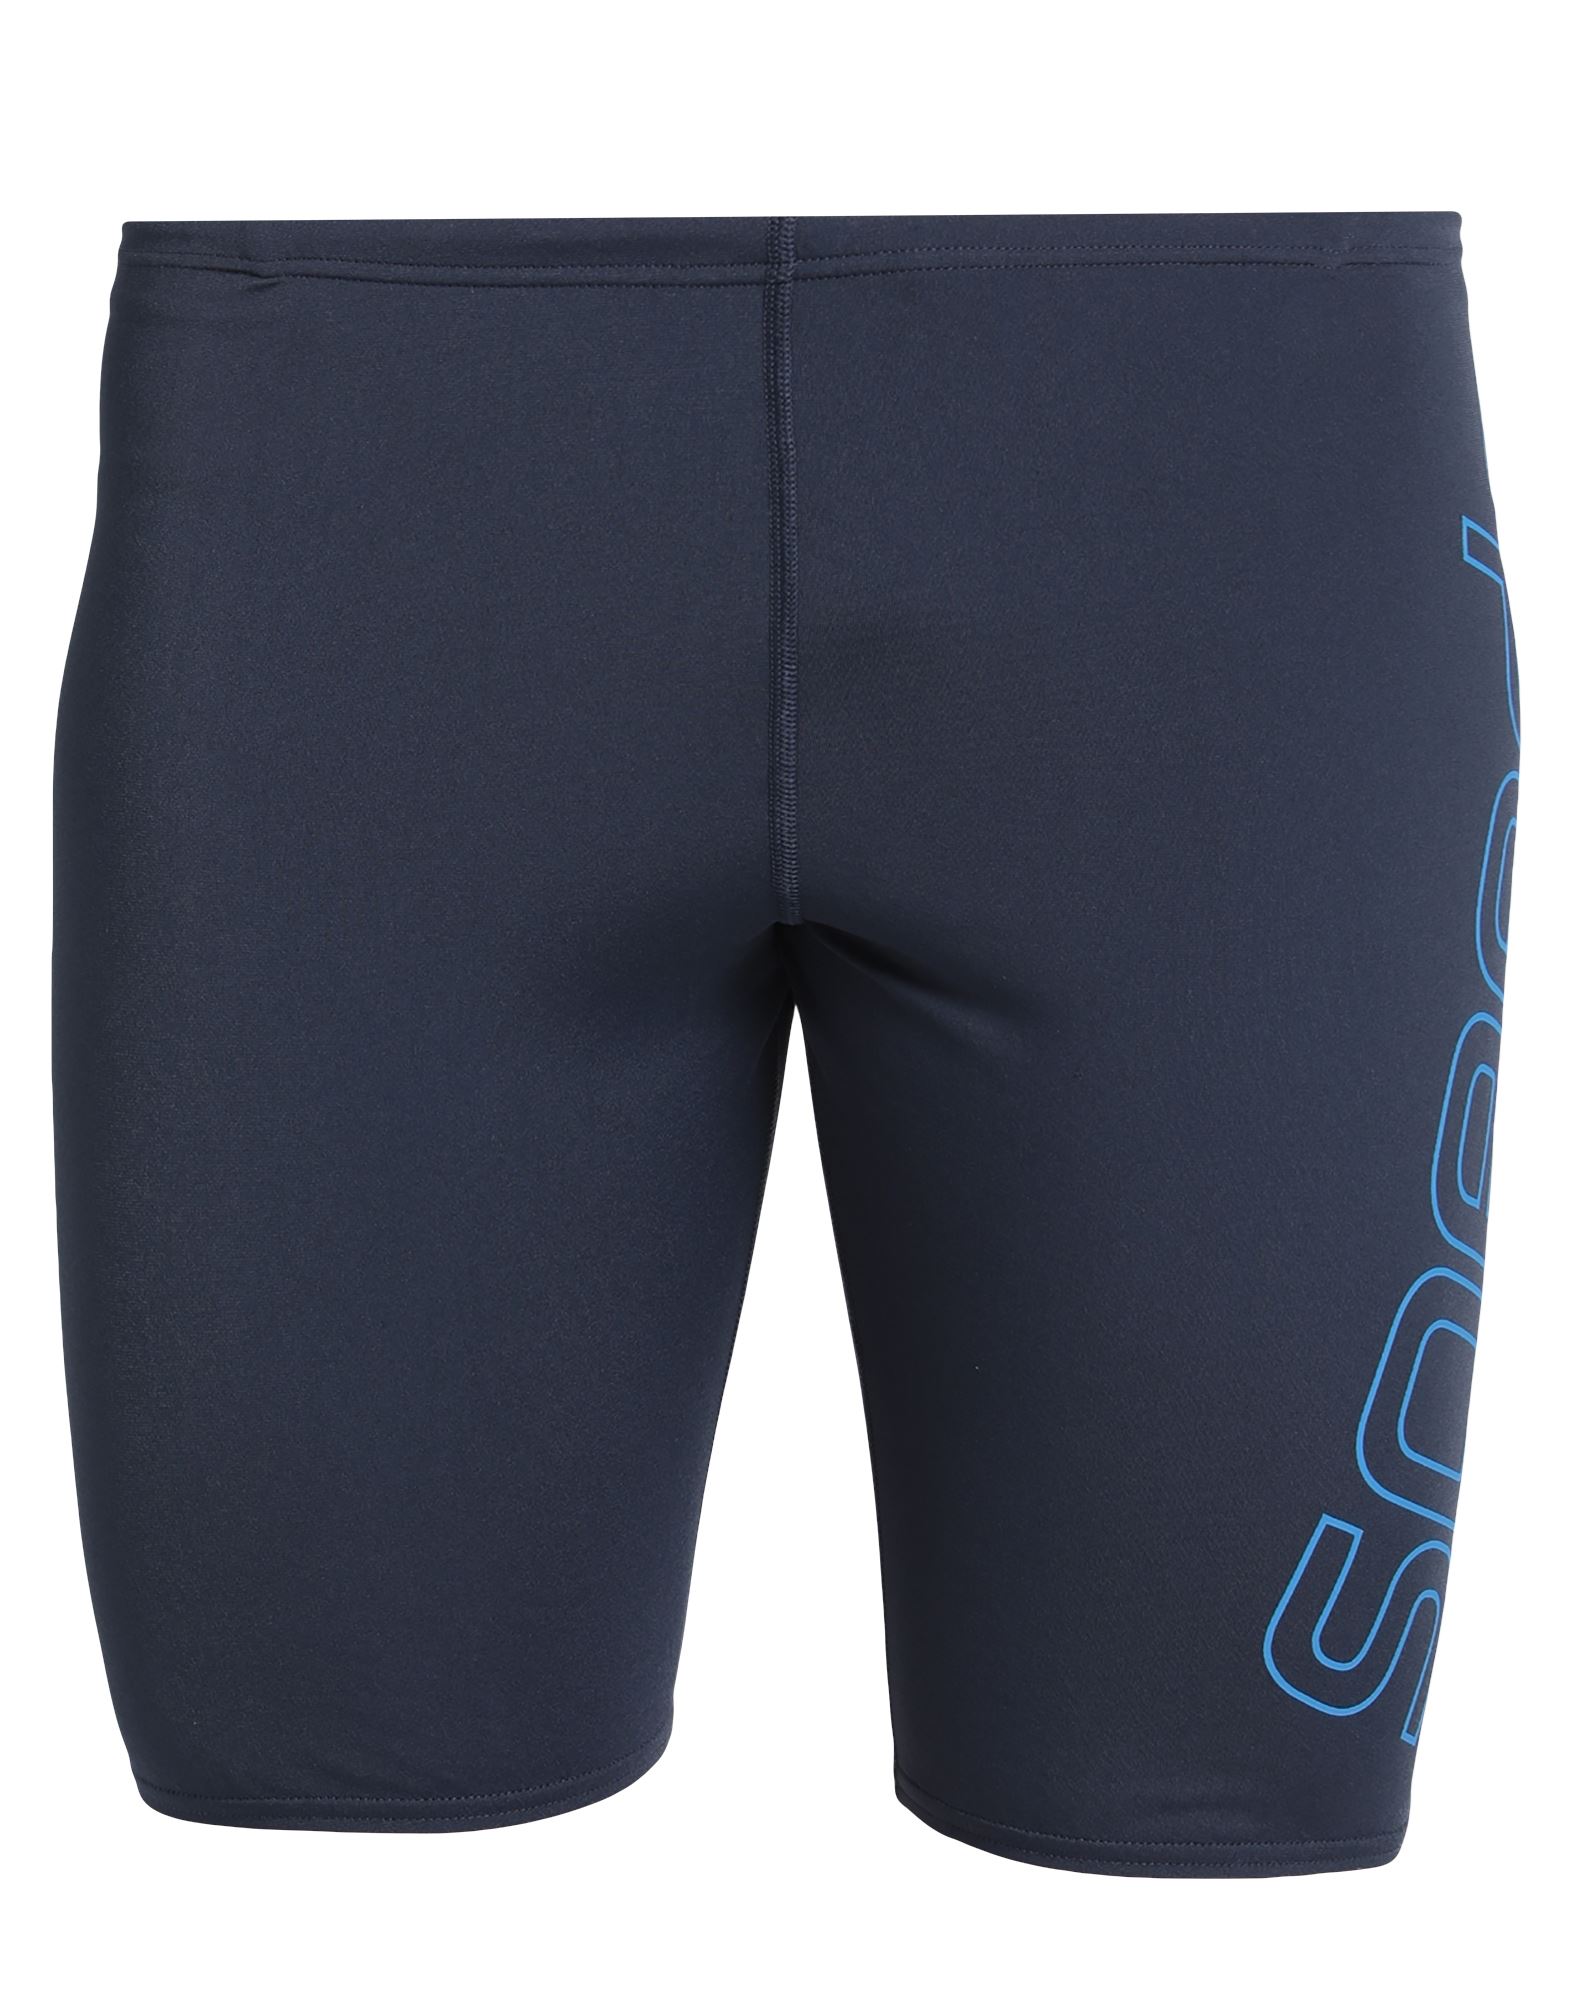 Shop Speedo Man Swim Trunks Midnight Blue Size 44 Polyester, Pbt - Polybutylene Terephthalate